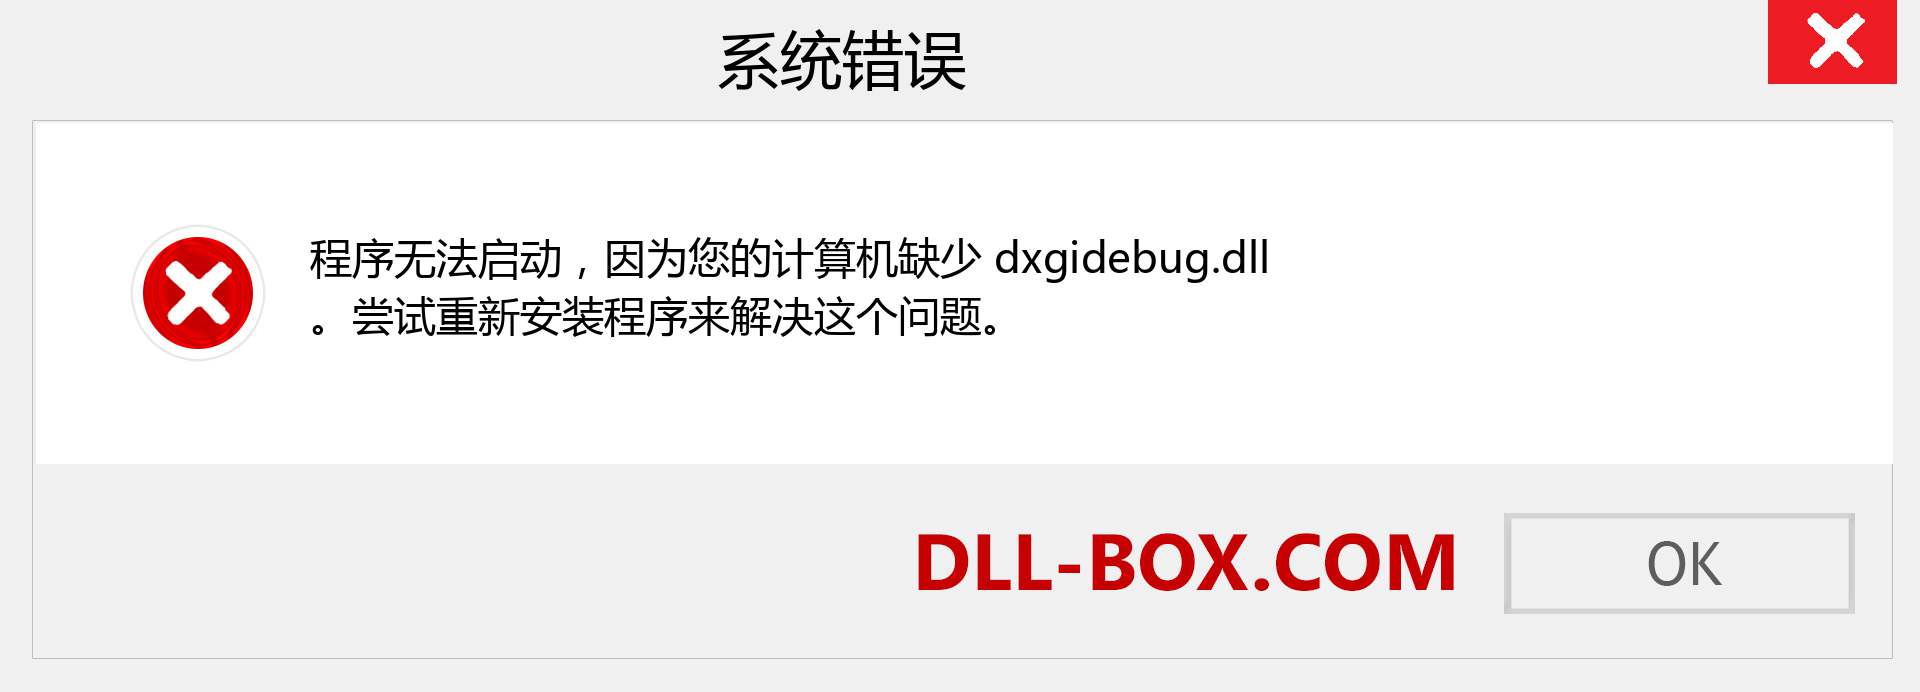 dxgidebug.dll 文件丢失？。 适用于 Windows 7、8、10 的下载 - 修复 Windows、照片、图像上的 dxgidebug dll 丢失错误